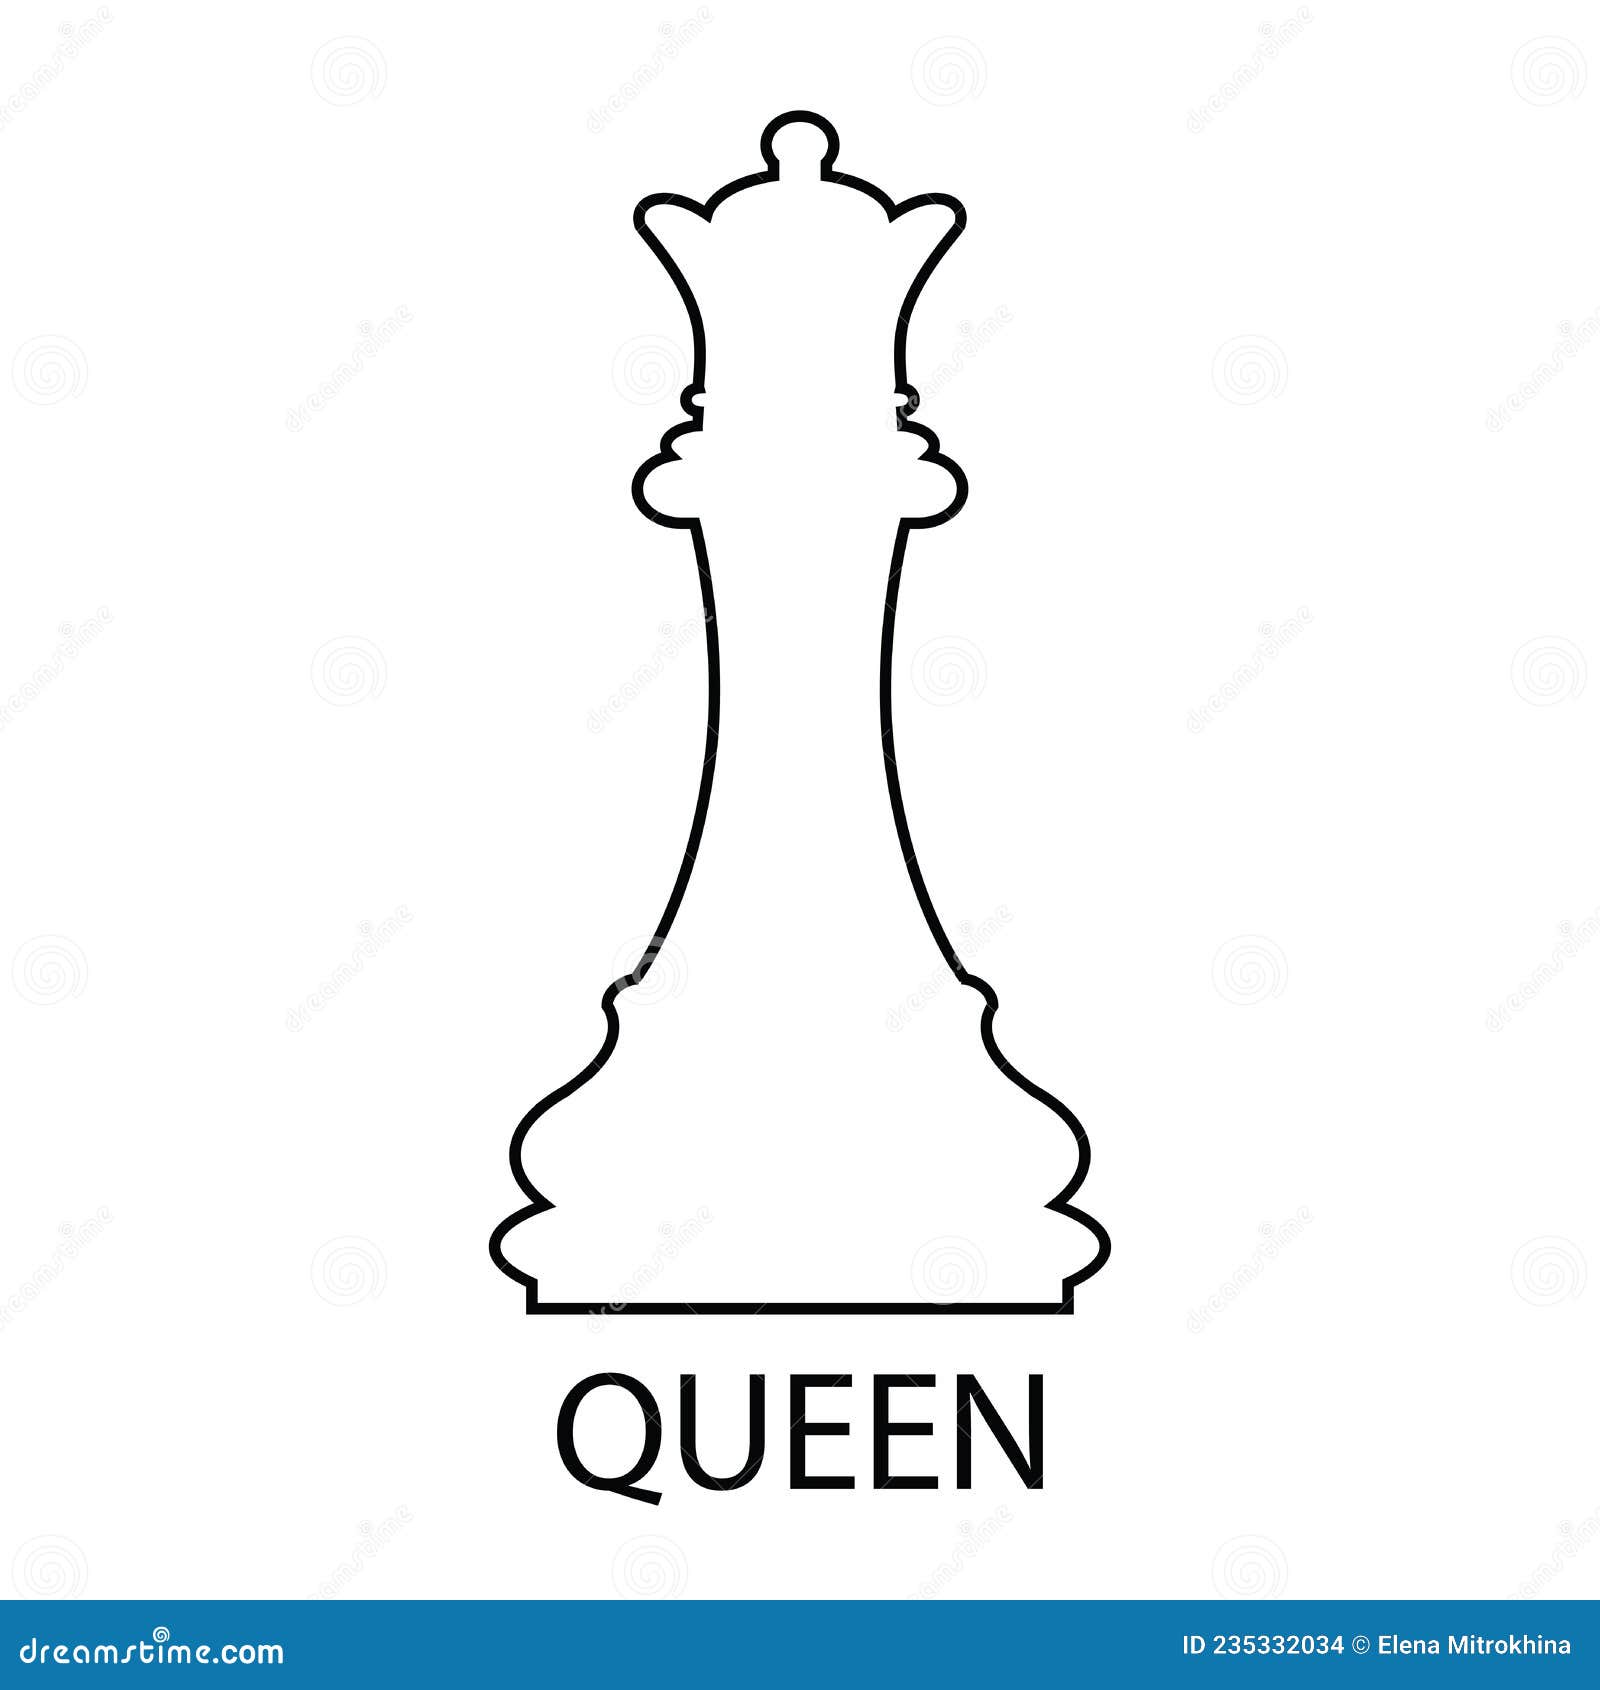 Vetores e ilustrações de Peca xadrez vertical para download